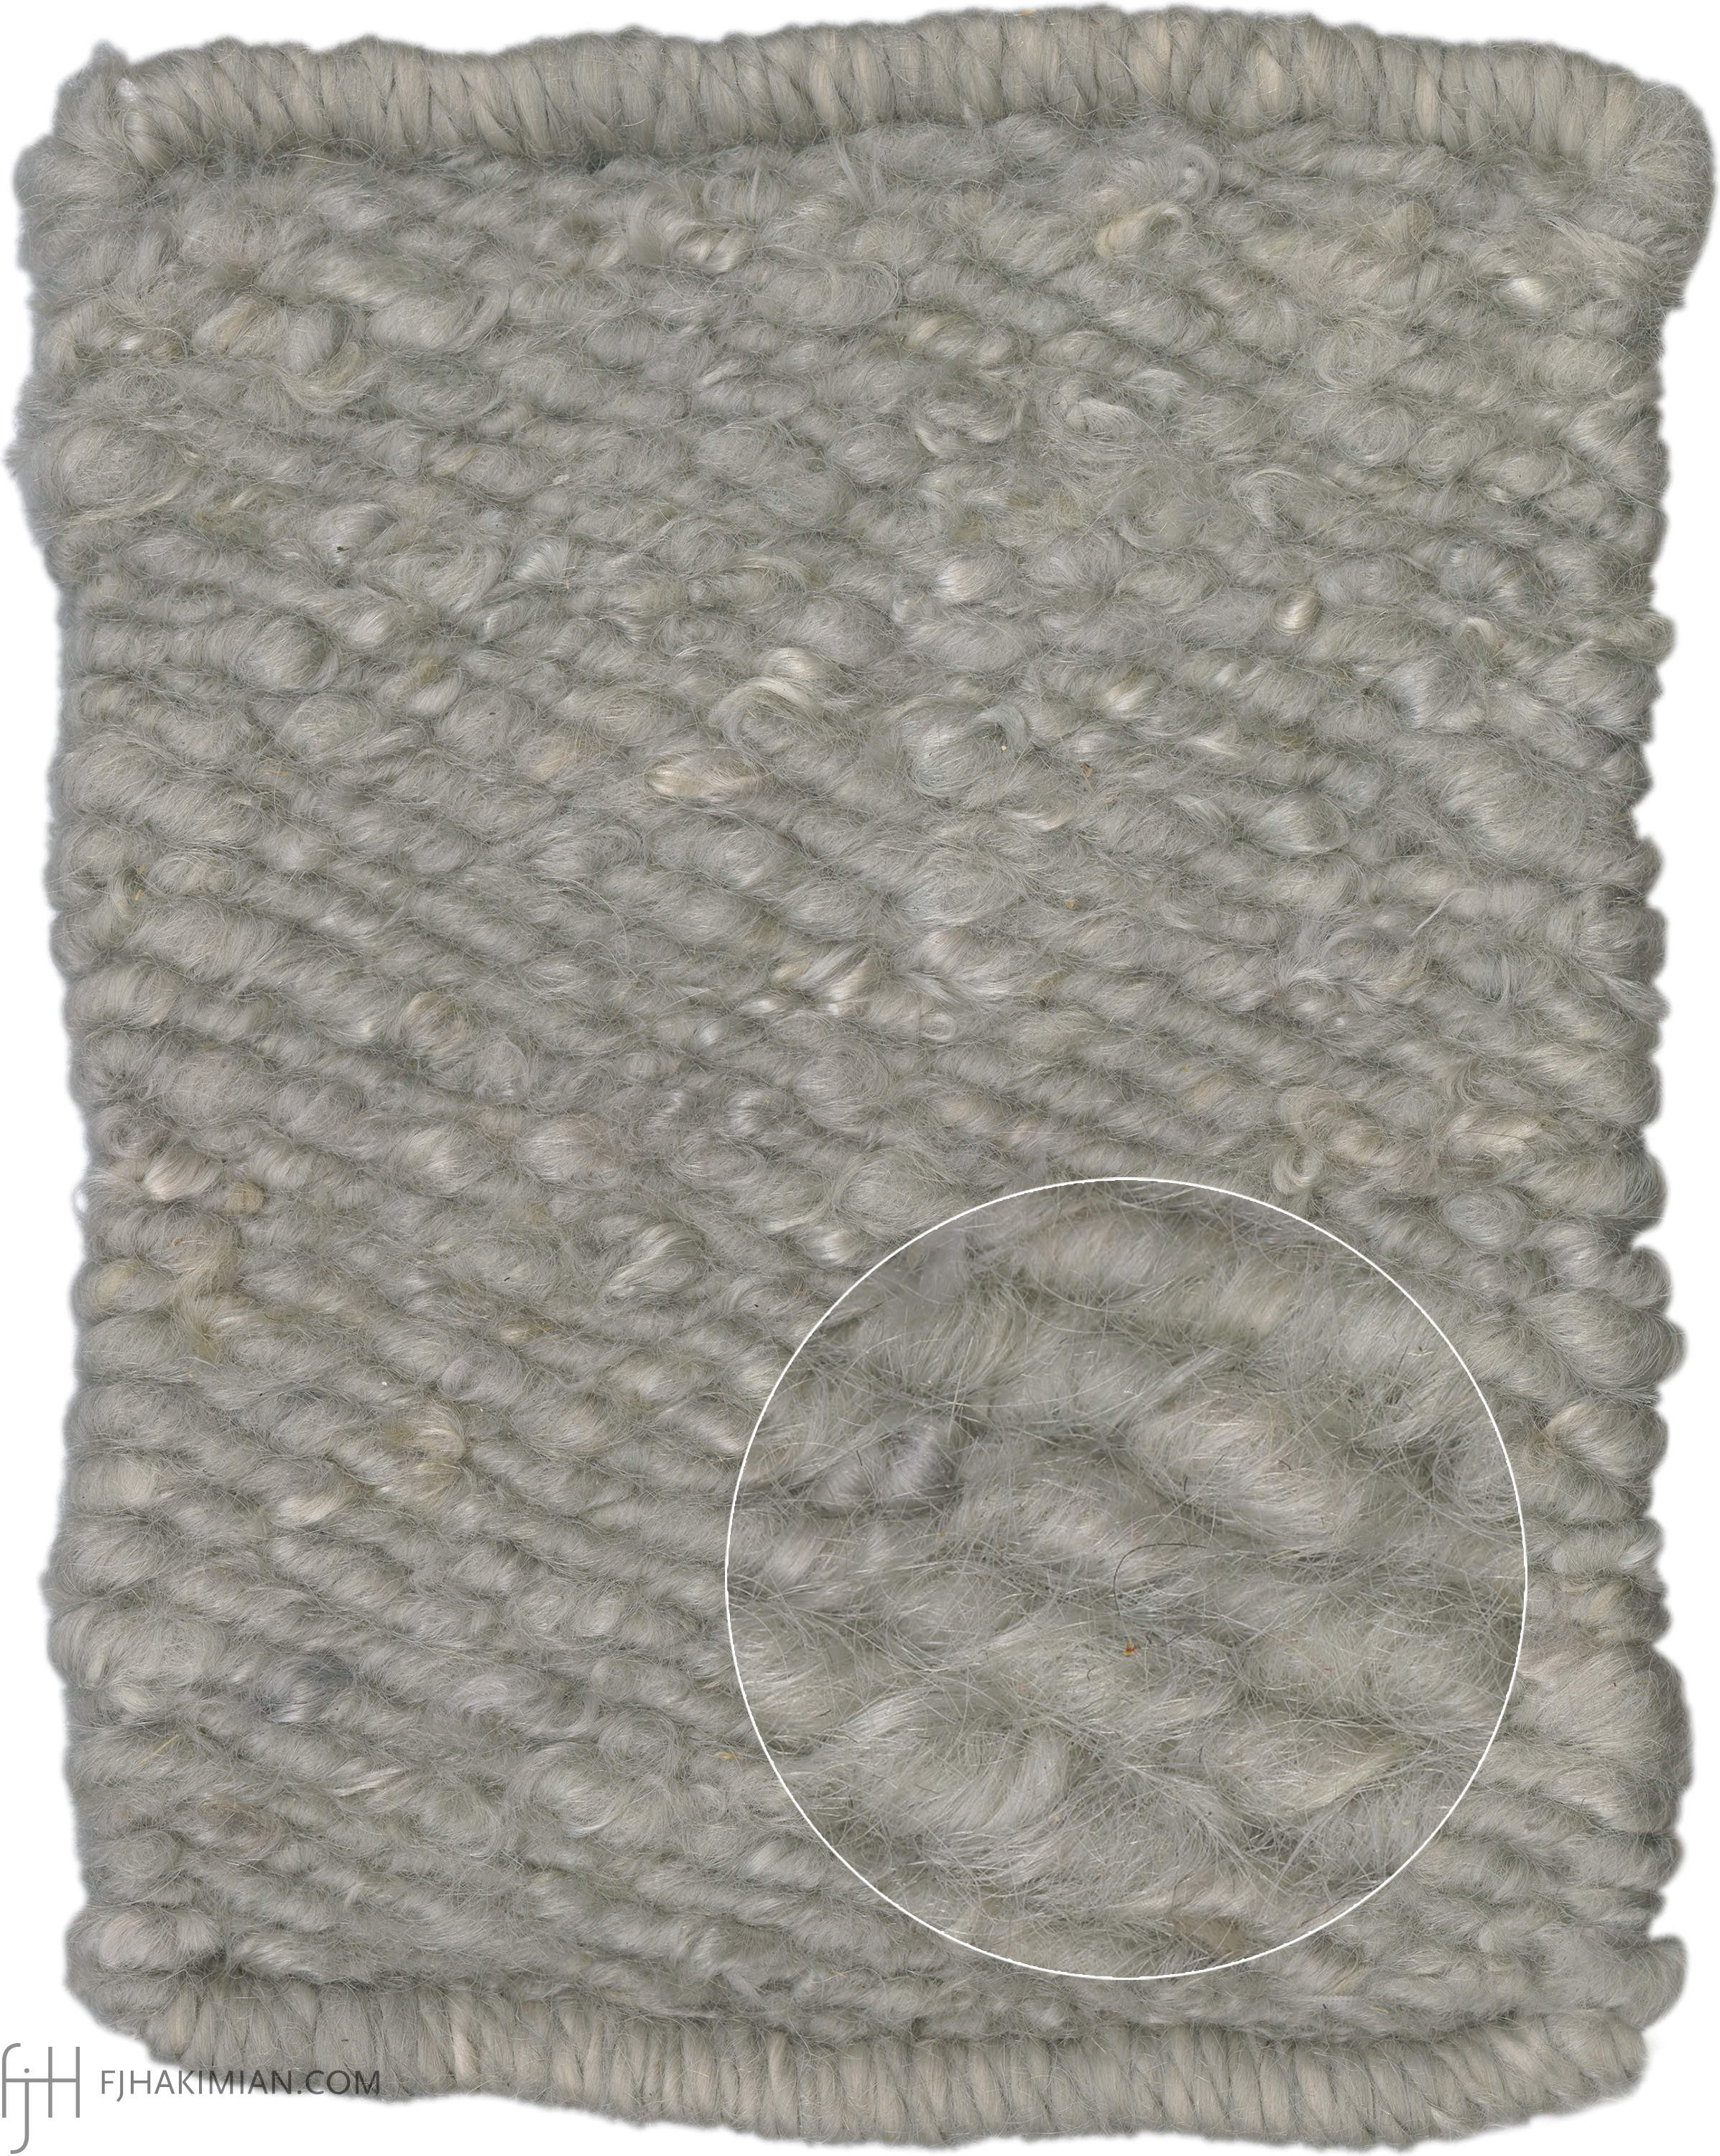 77807 KL Dove Gray Custom Carpet | FJ Hakimian Carpet Gallery, New York 